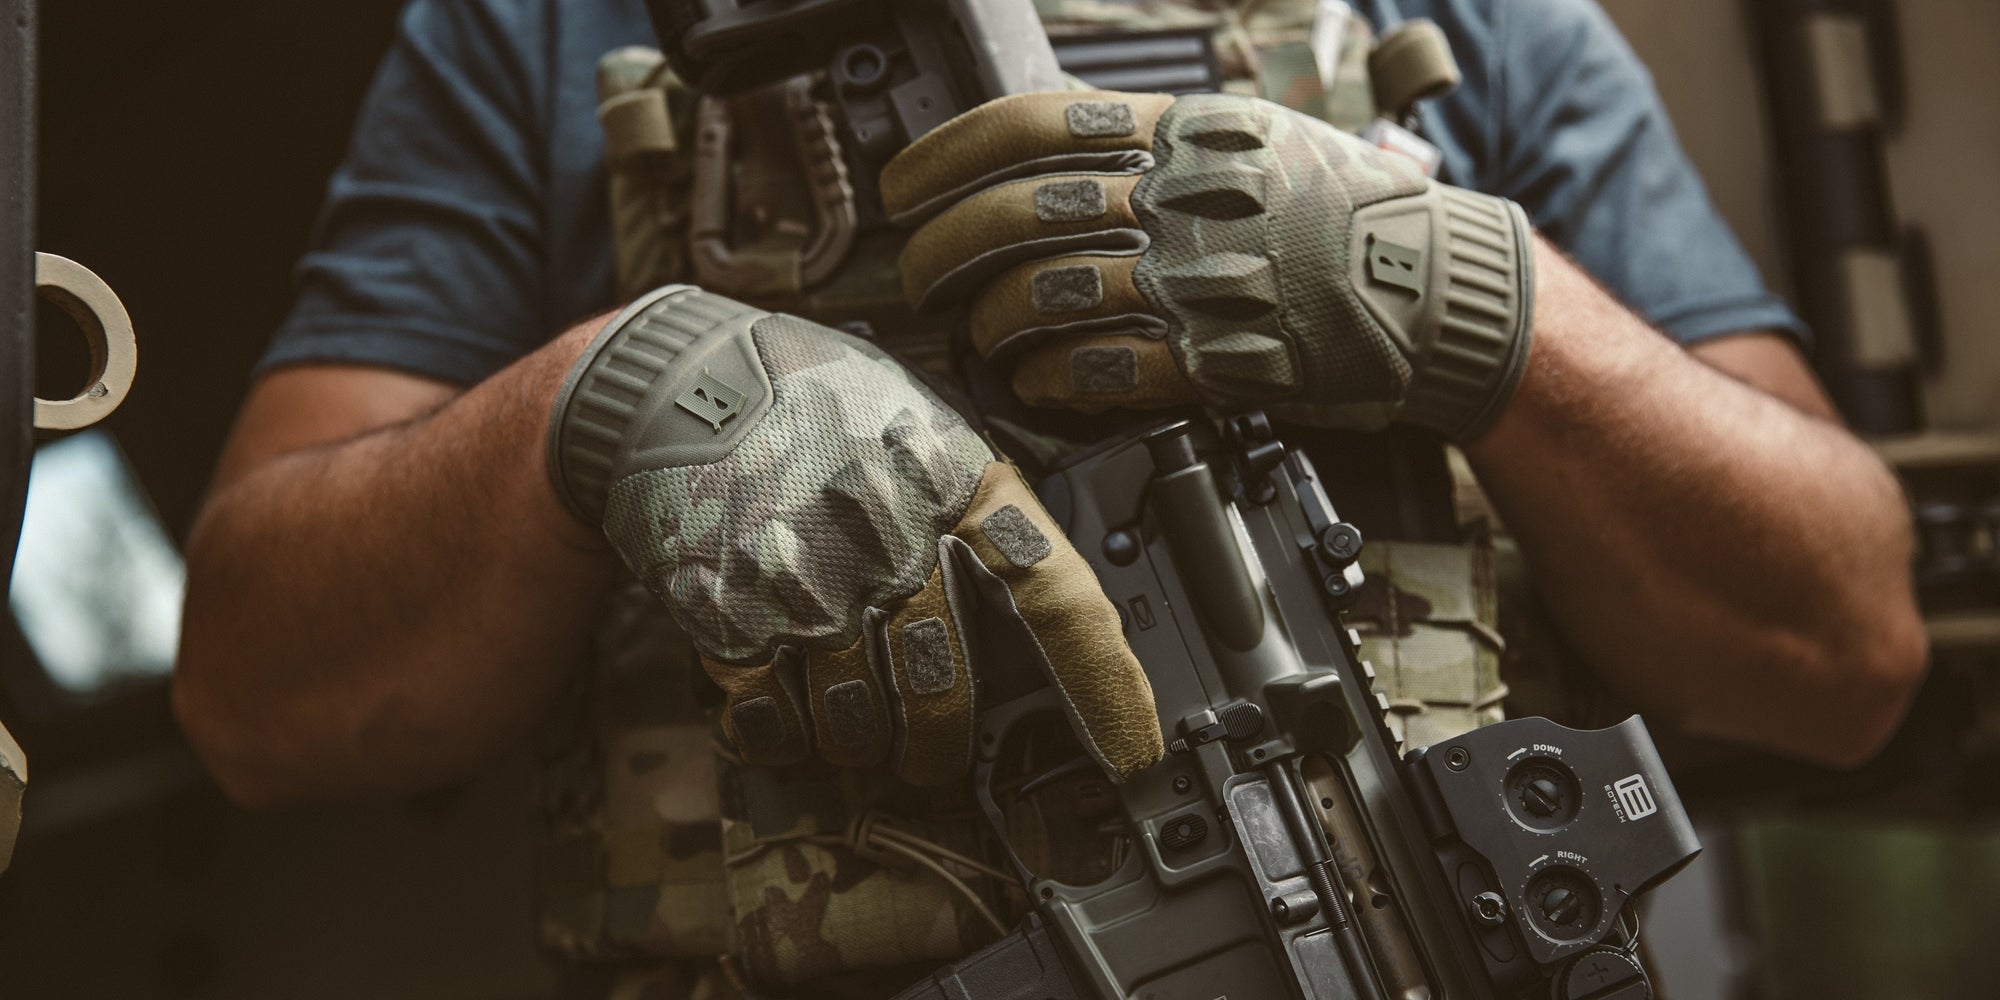 VIKTOS Kadre Kit Gloves Ranger Gloves VIKTOS Tactical Gear Supplier Tactical Distributors Australia